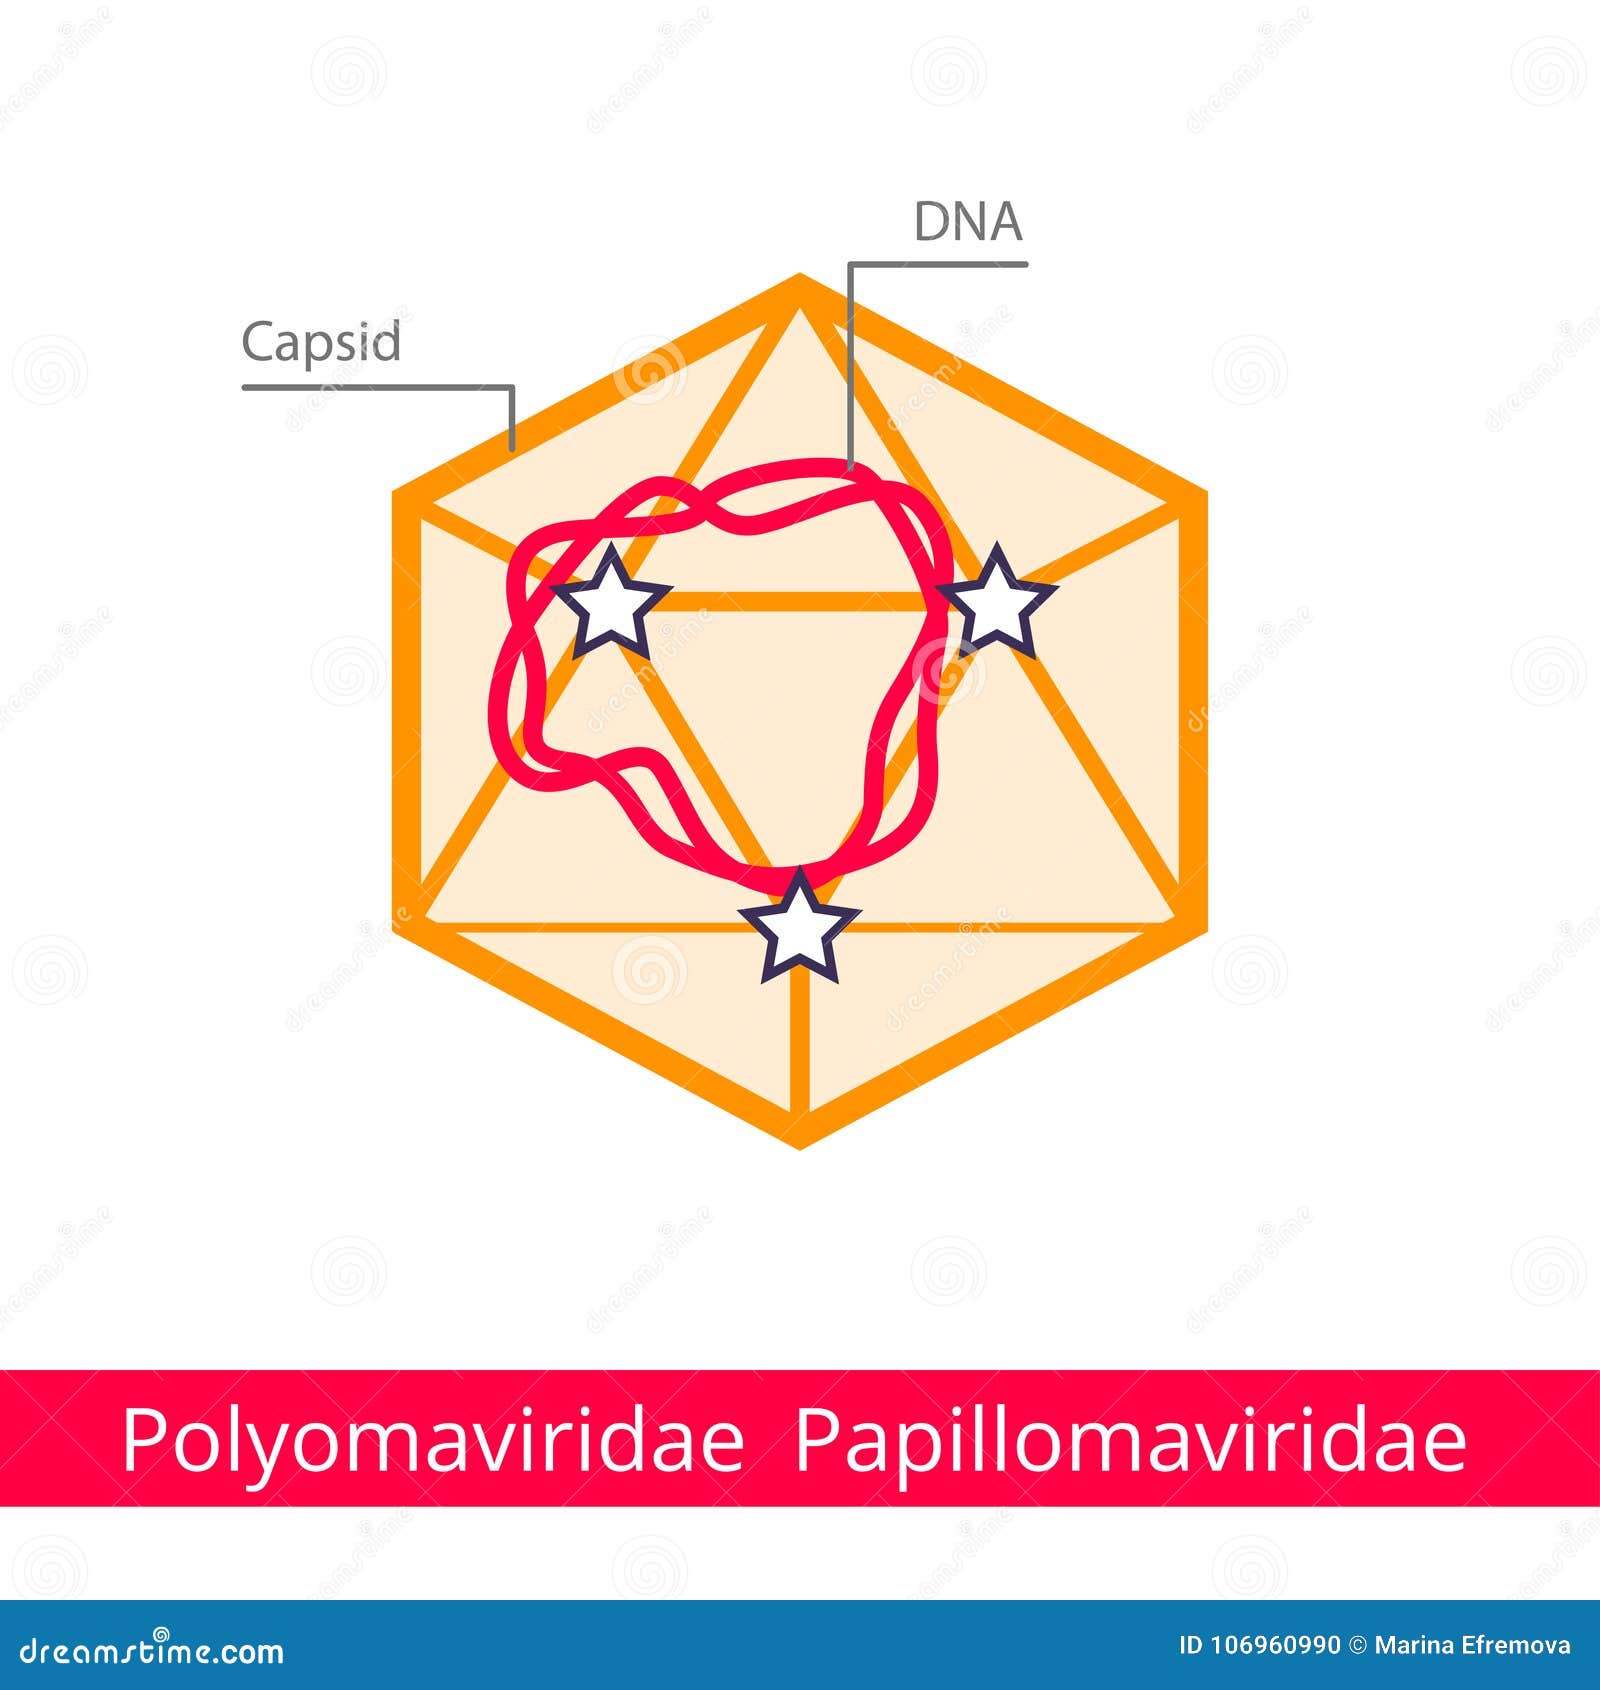 what is human papillomavirus hpv symptoms